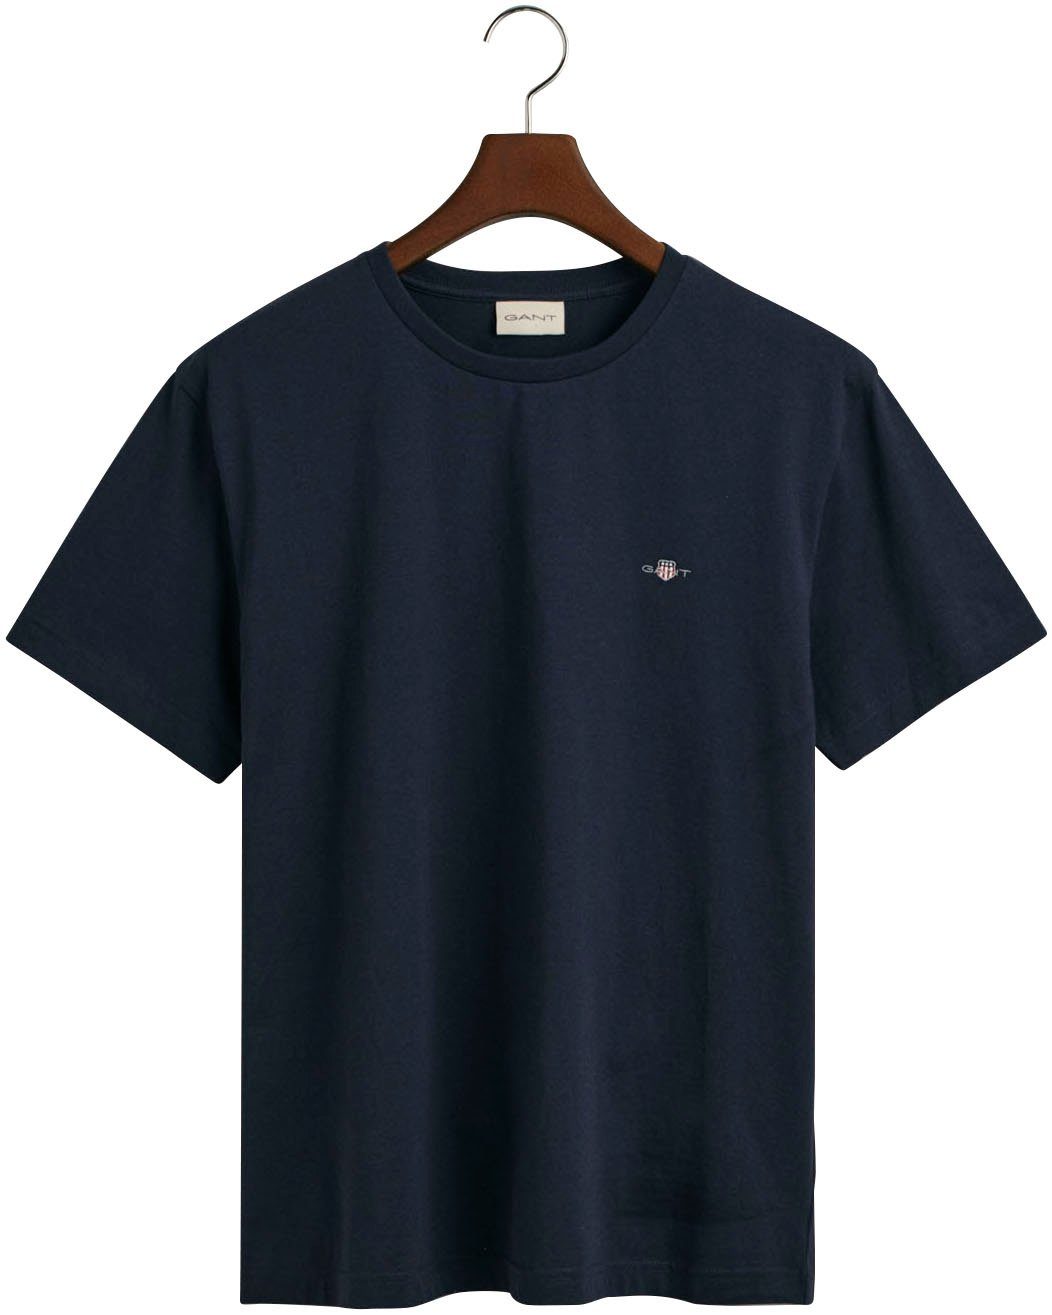 T-SHIRT Gant blue Logostickerei T-Shirt REG SS evening mit Brust SHIELD auf der